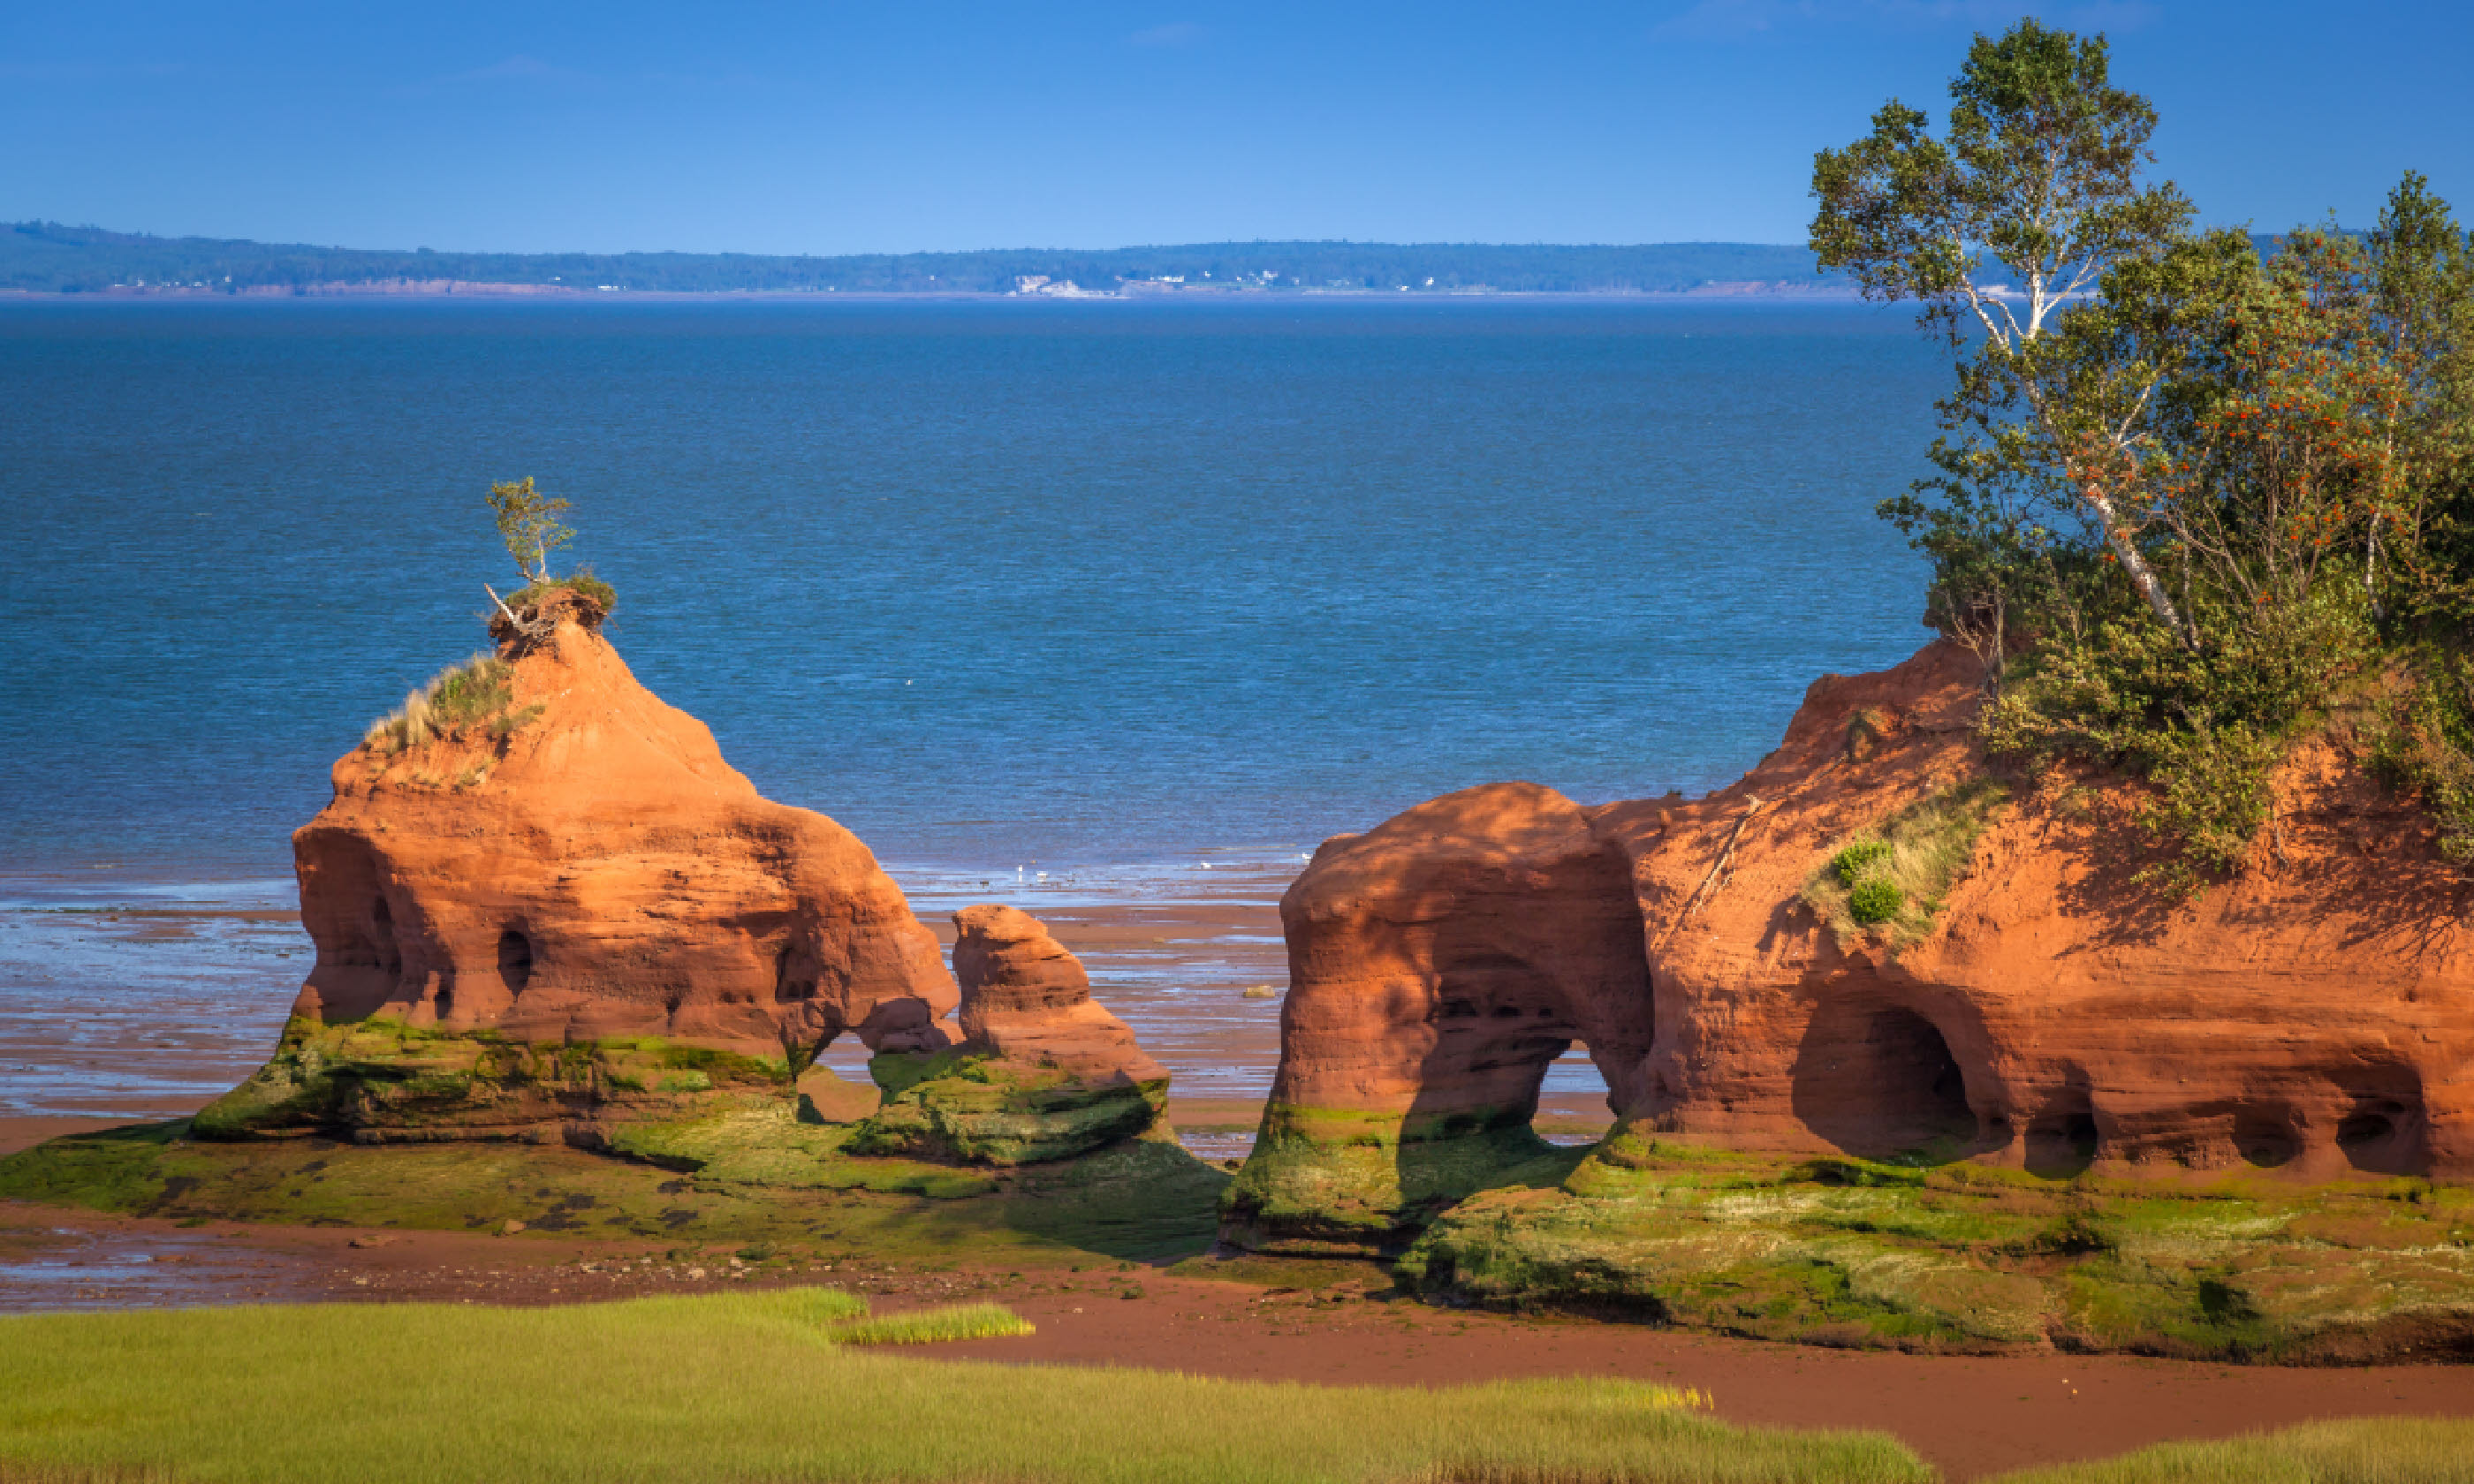 Bay of Fundy, Nova Scotia (Shutterstock)